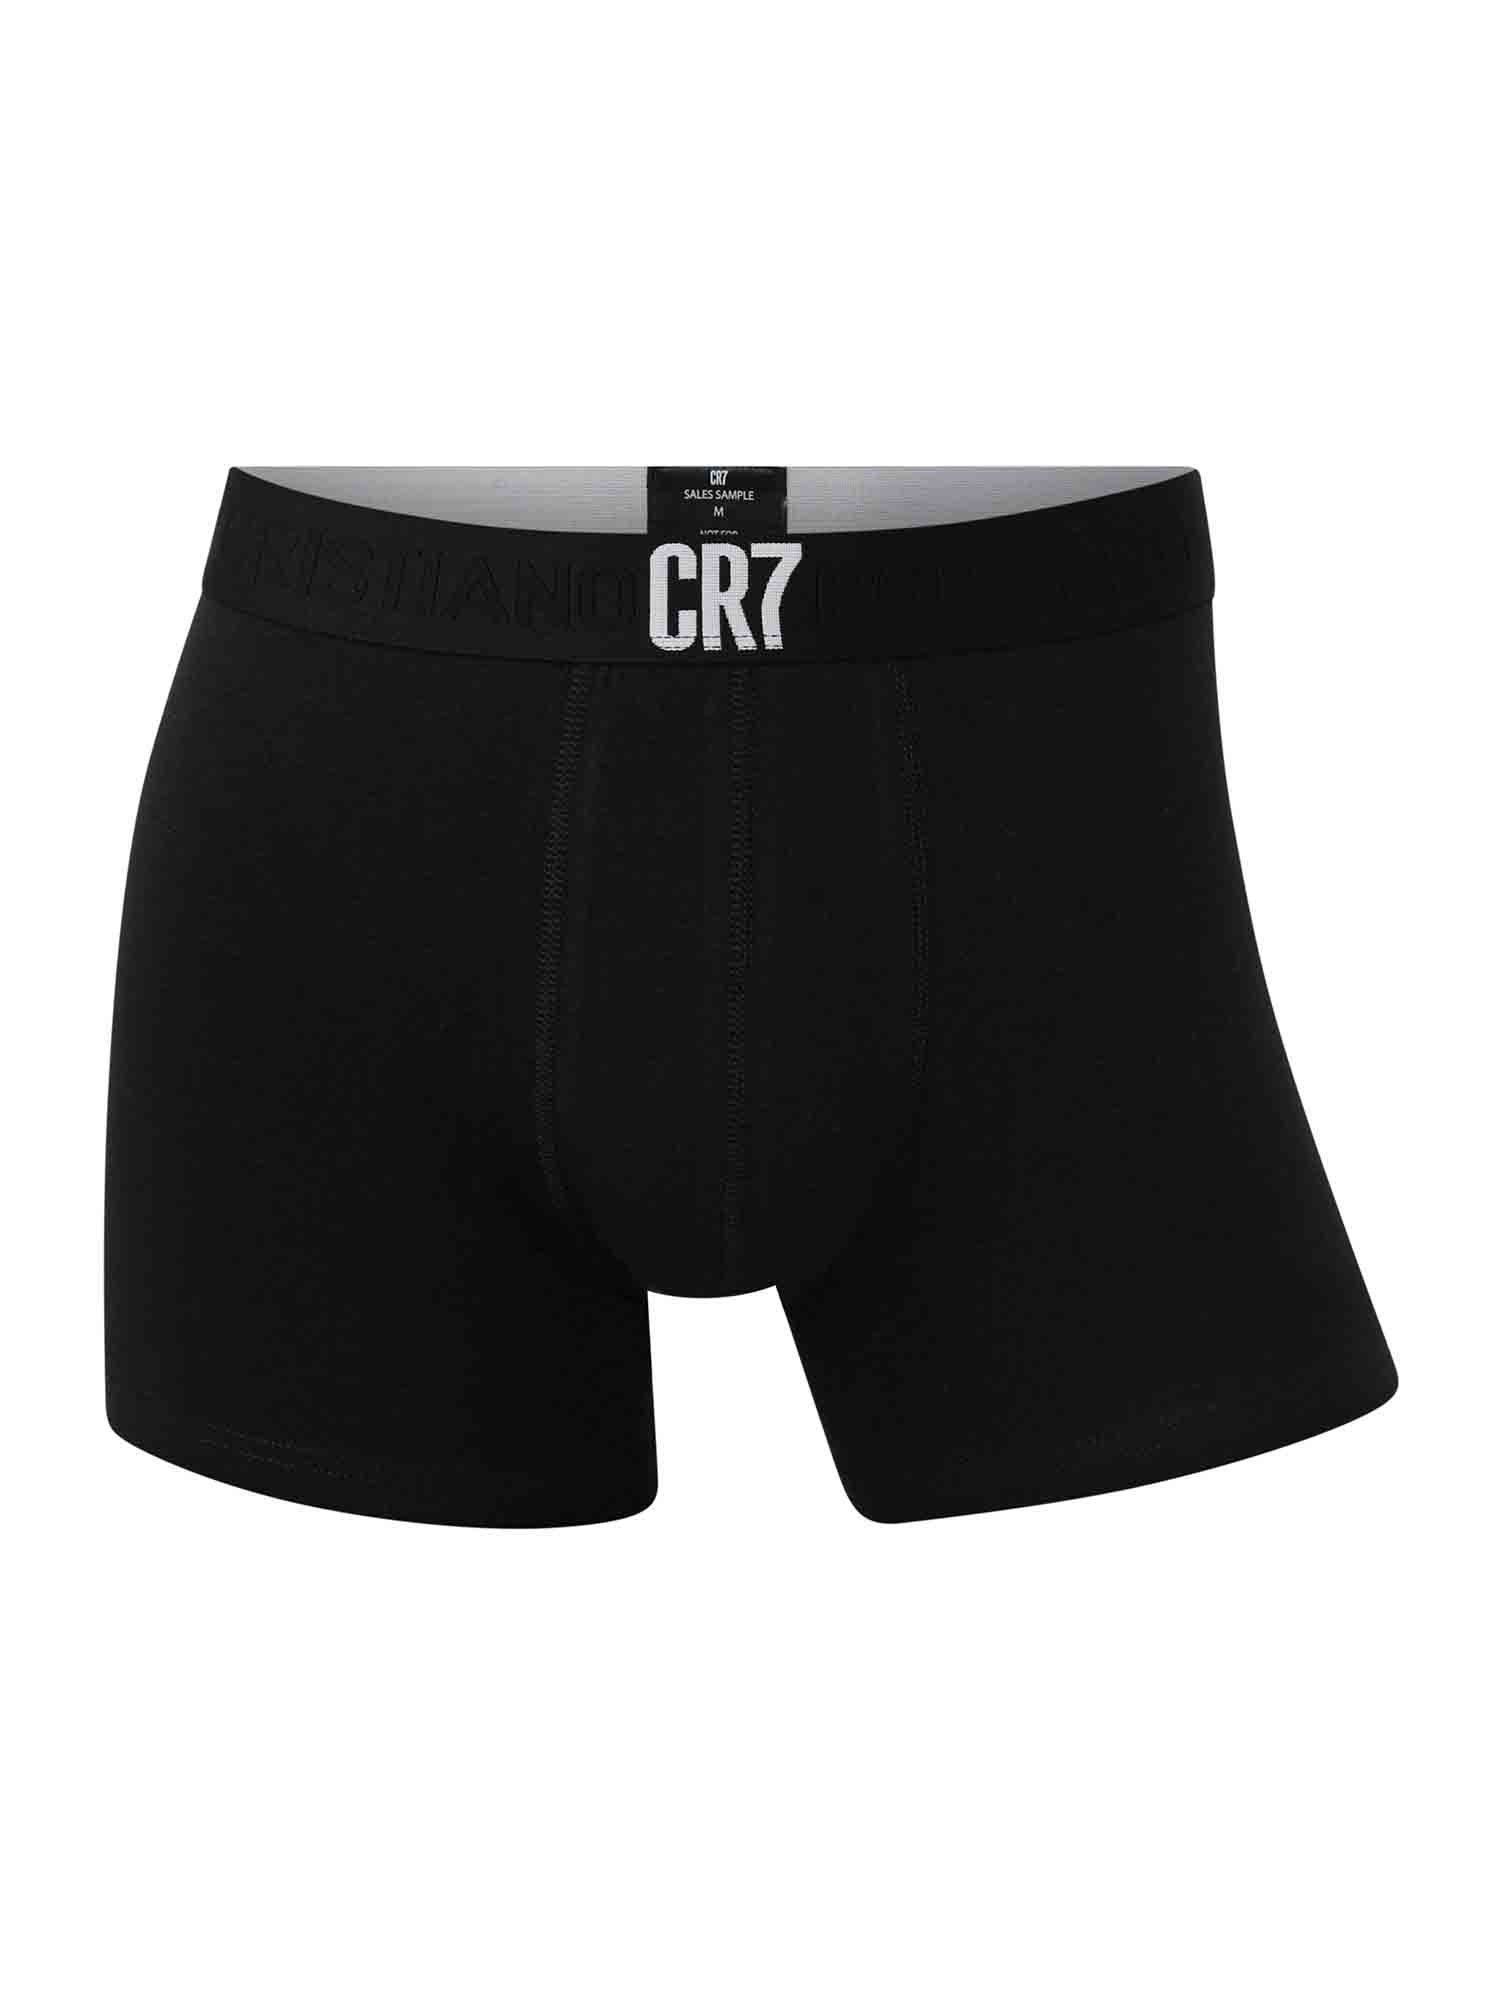 34 Retro Multipack CR7 Trunks (5-St) Herren Pants Multi Männer Retro Boxershorts Pants